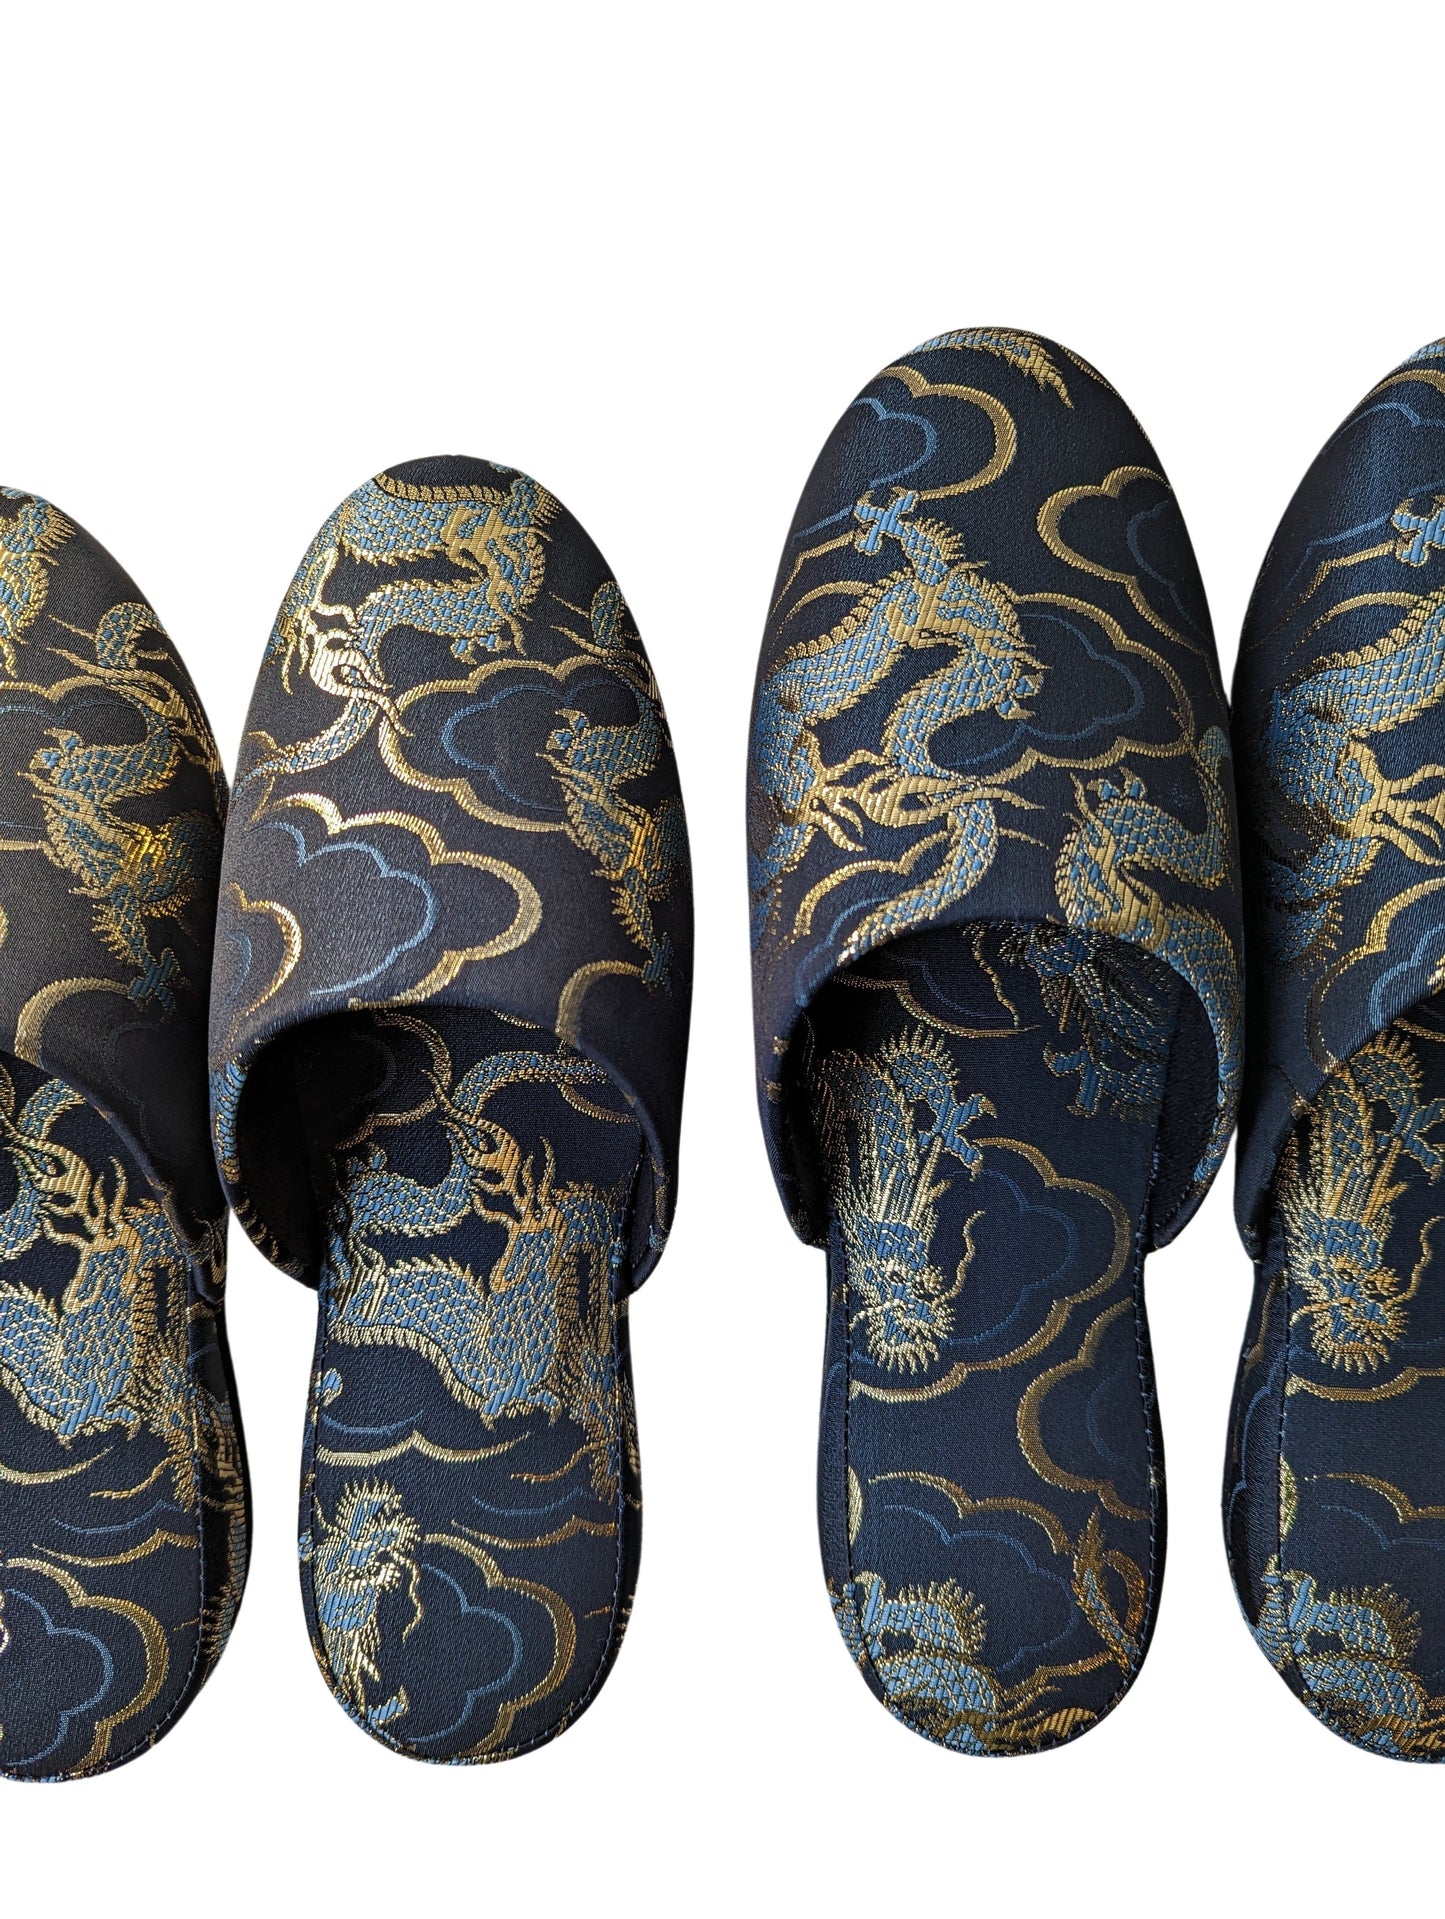 Azure Dragon Slippers [Black wool felt sole]